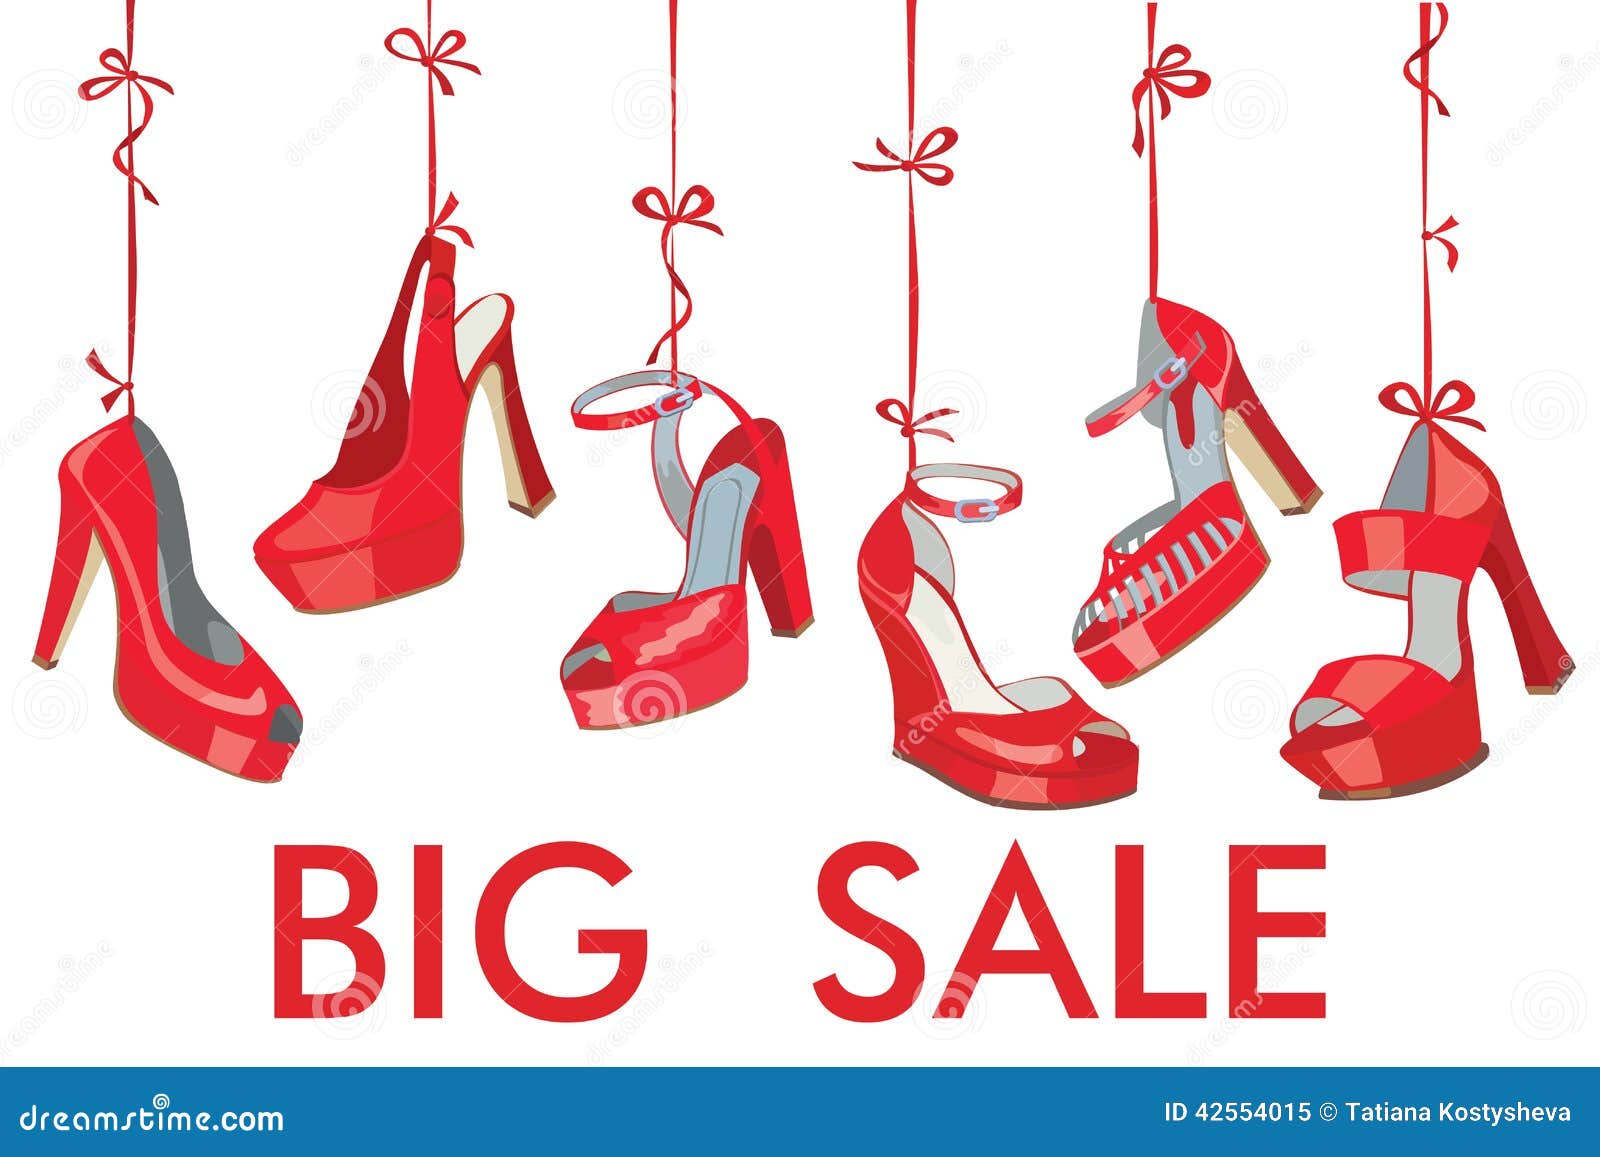 womens shoes sale